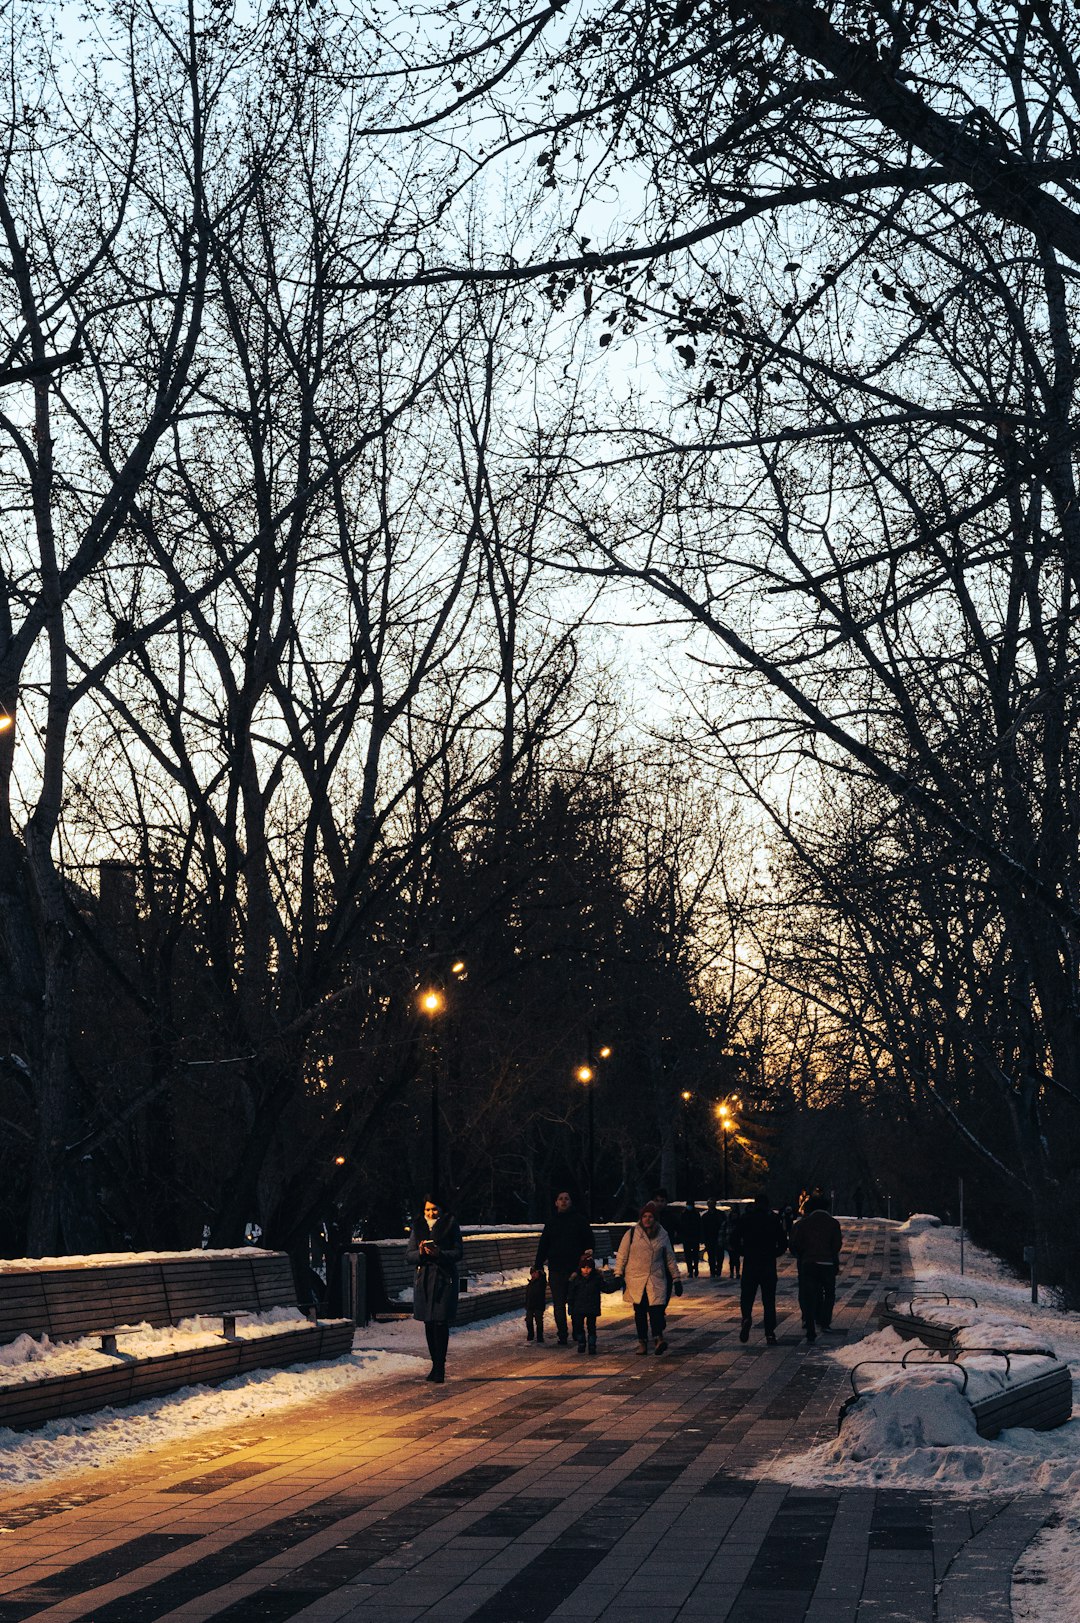 people walking on park during night time